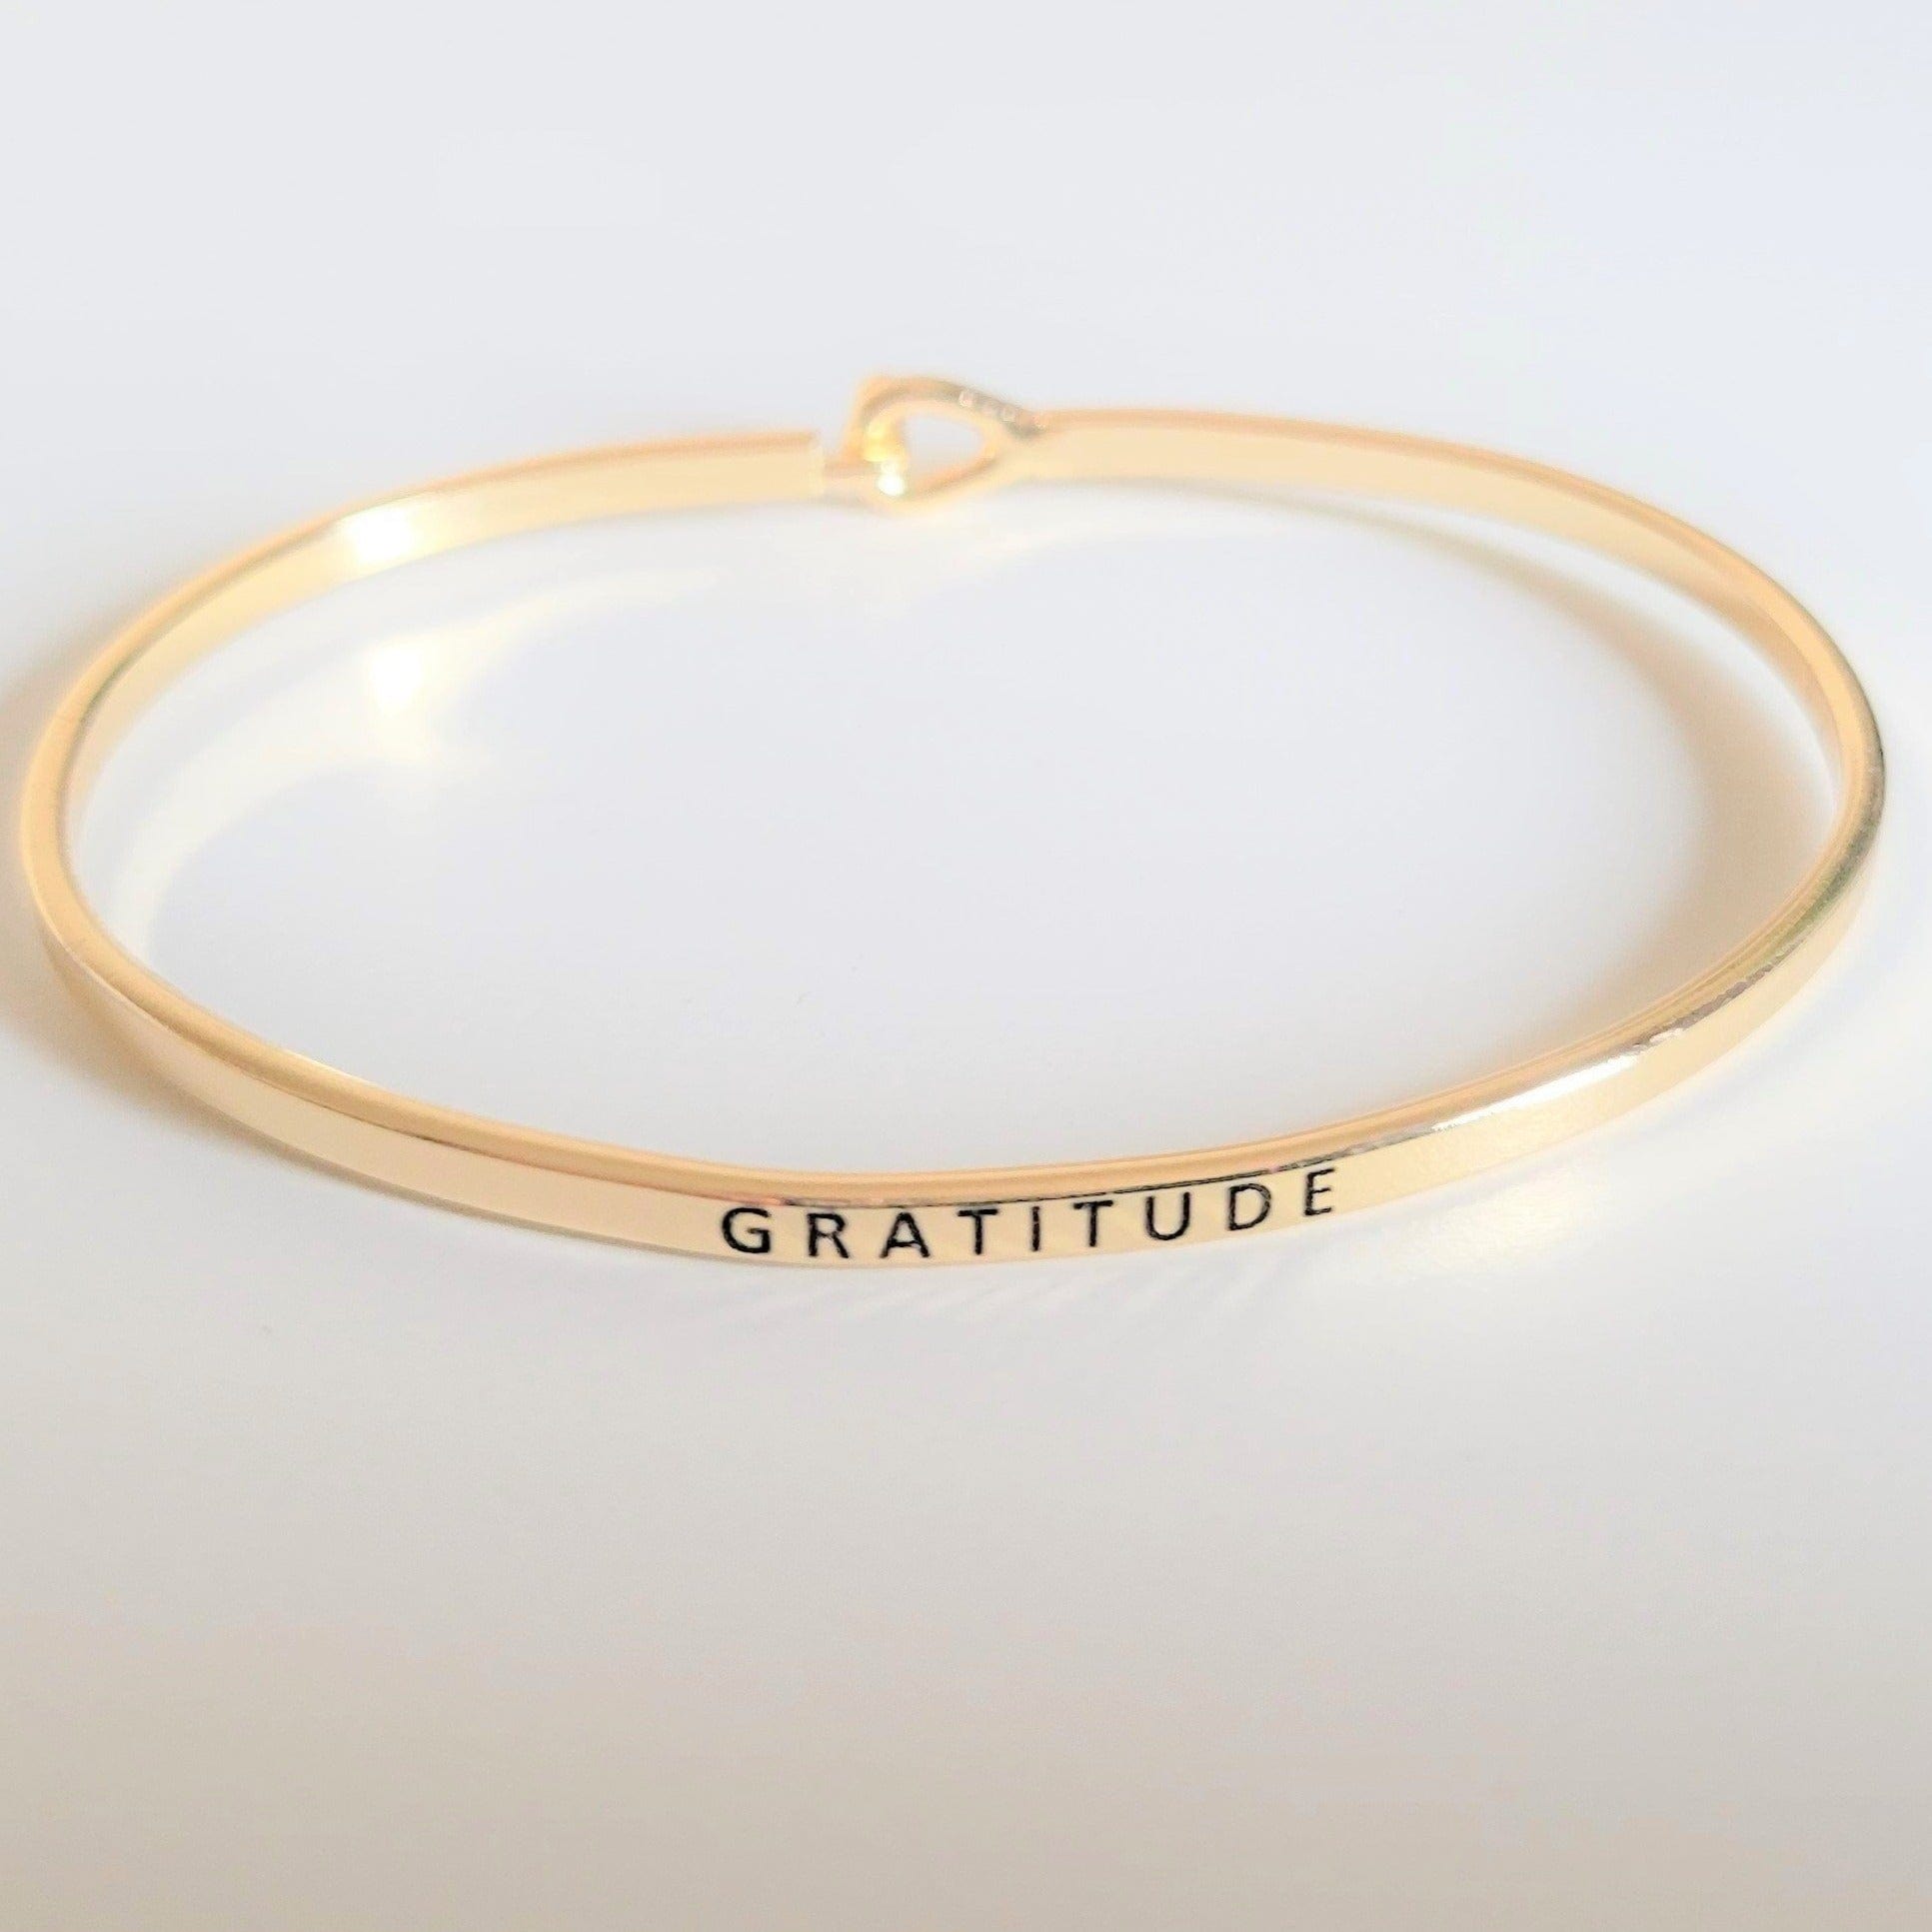 "Gratitude" Bracelet By Recovery Mattters Gold